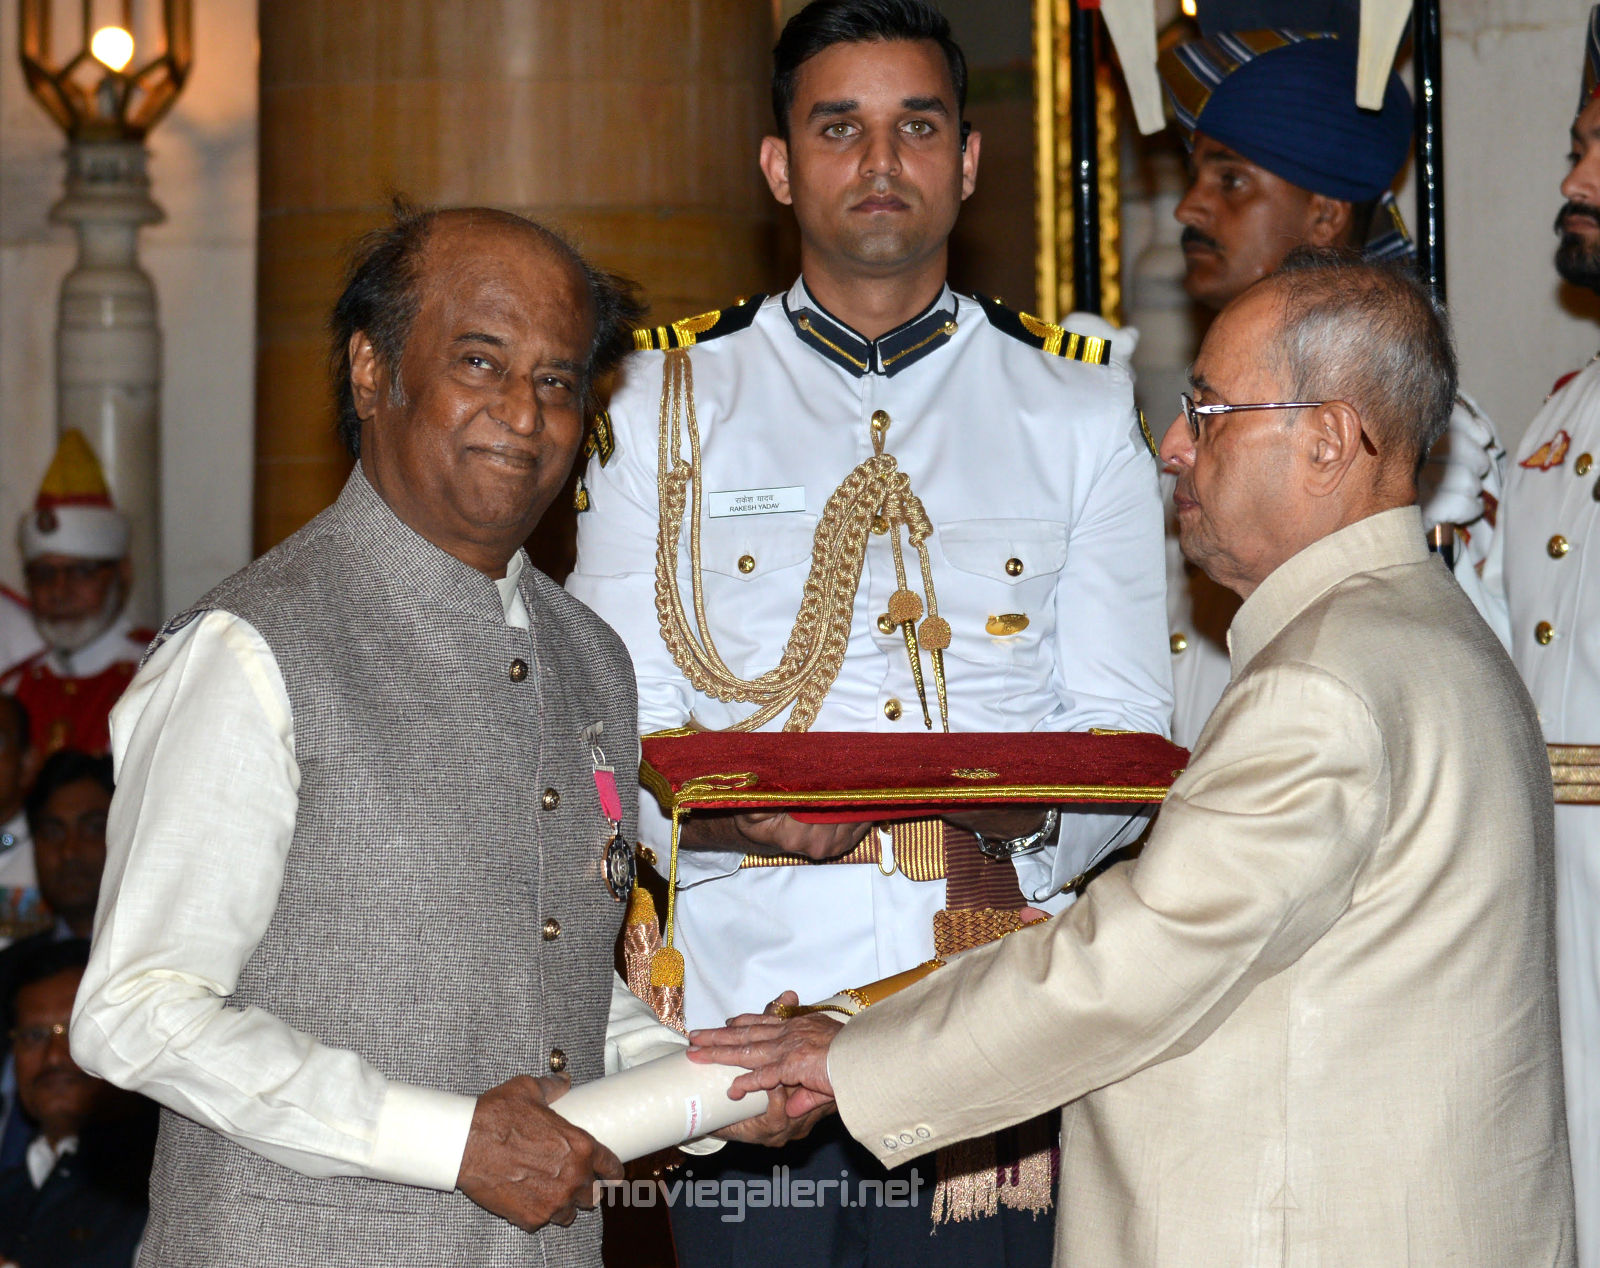 Rajinikanth Awards and Achievements: